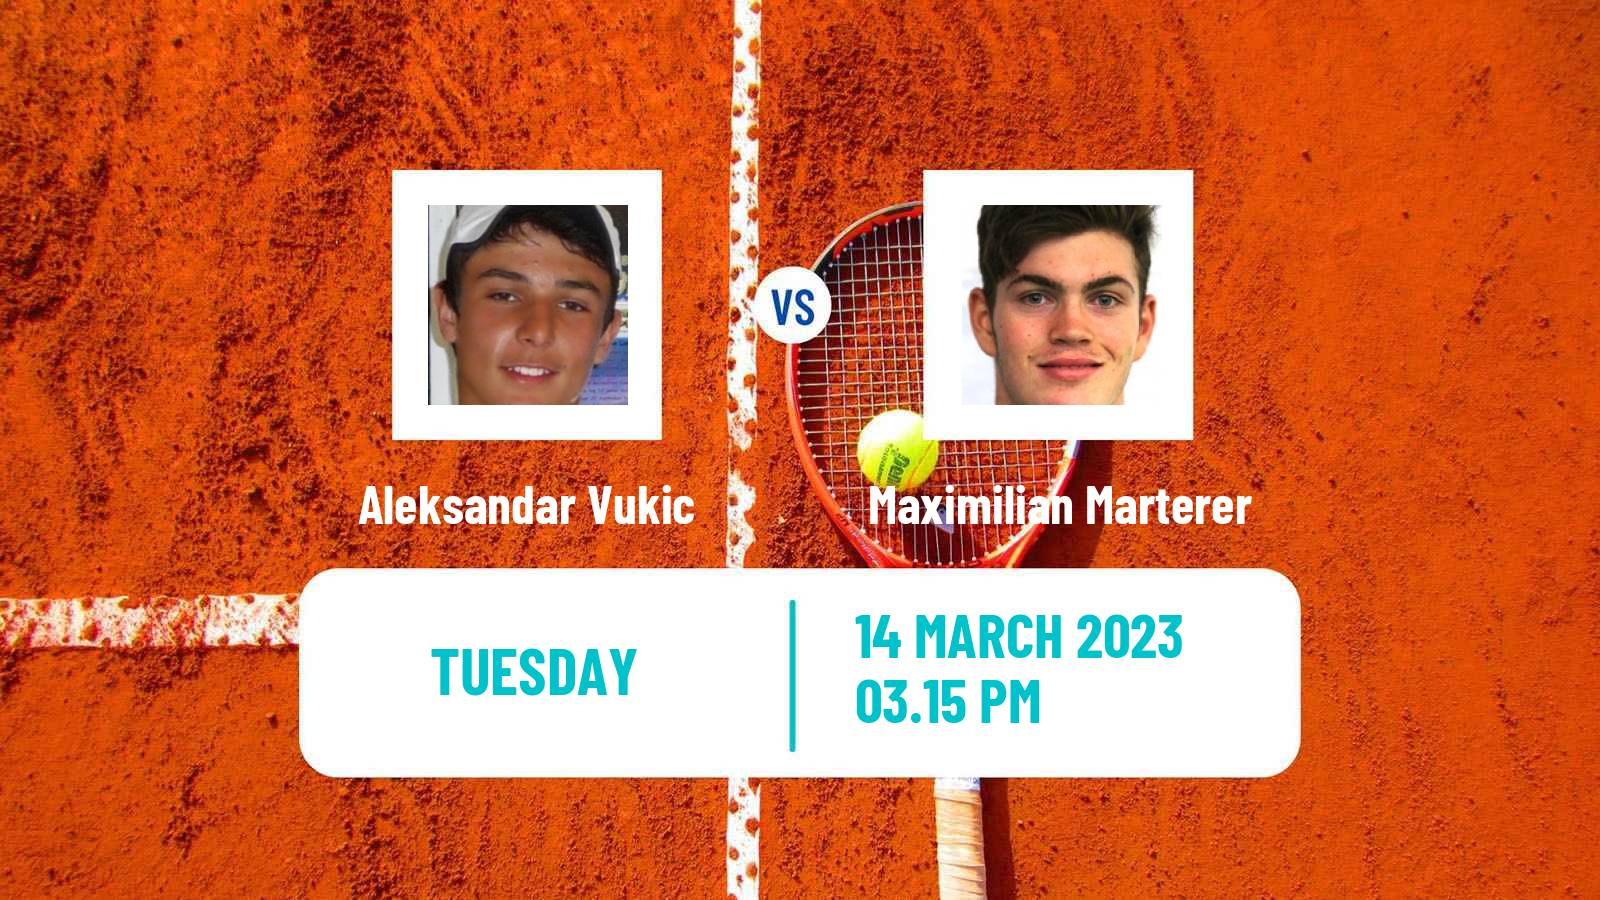 Tennis ATP Challenger Aleksandar Vukic - Maximilian Marterer